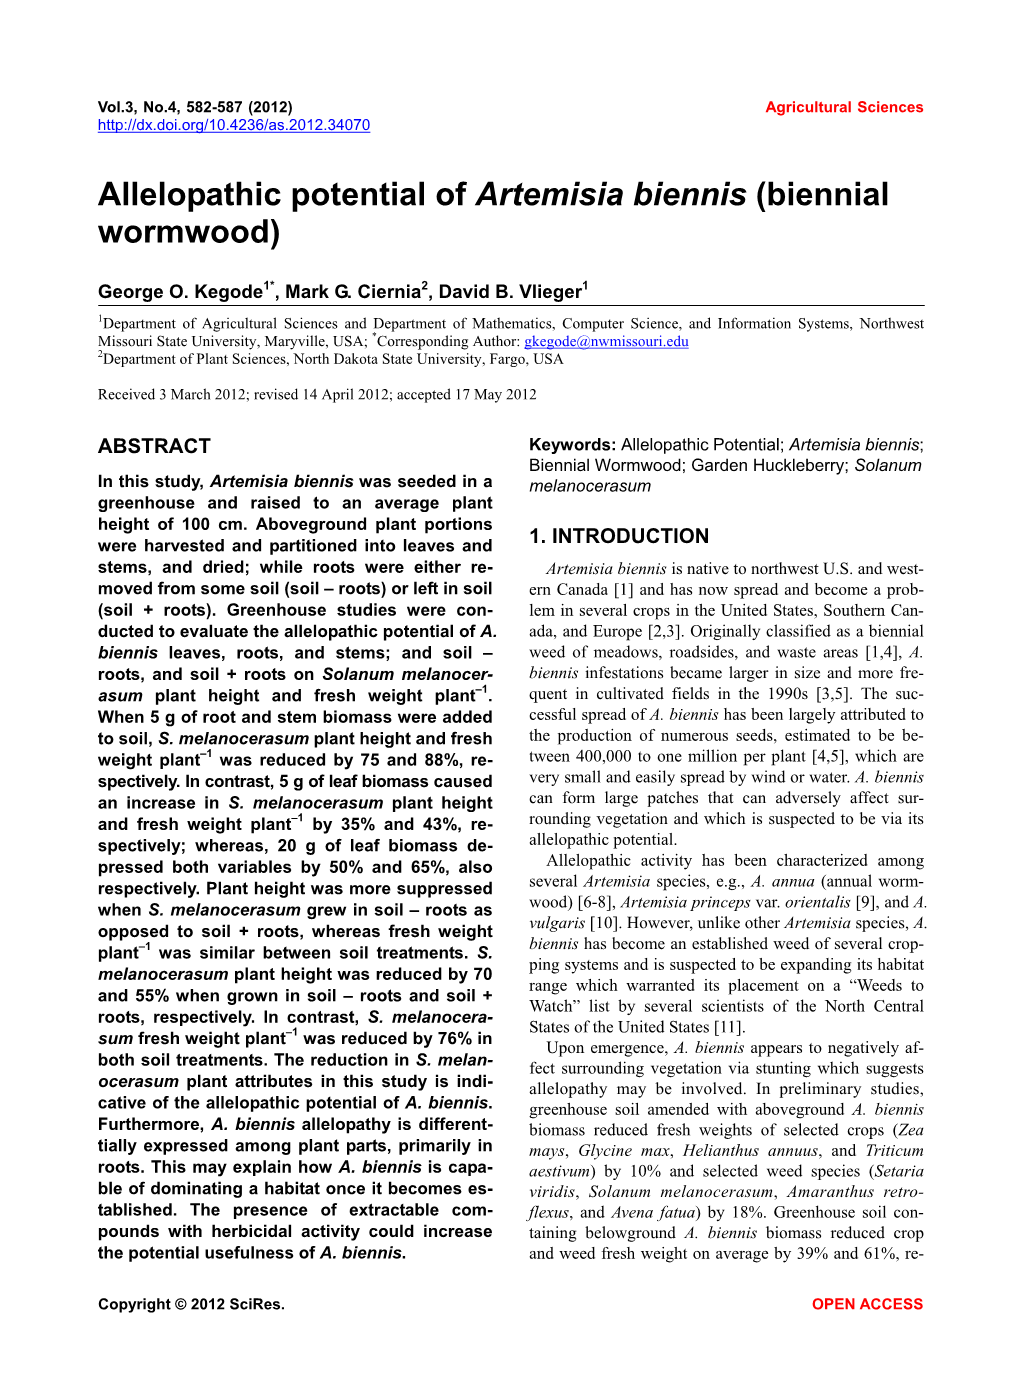 Allelopathic Potential of Artemisia Biennis (Biennial Wormwood)